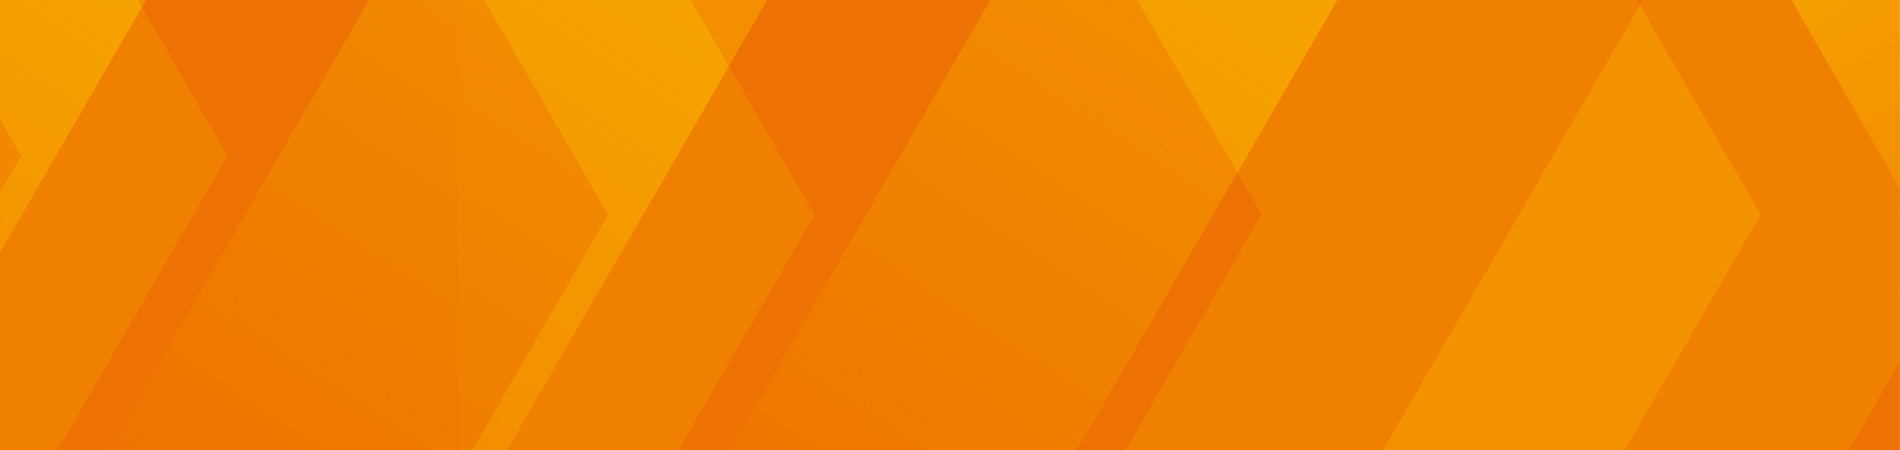 Orange mobile responsive banner from permanent tsb